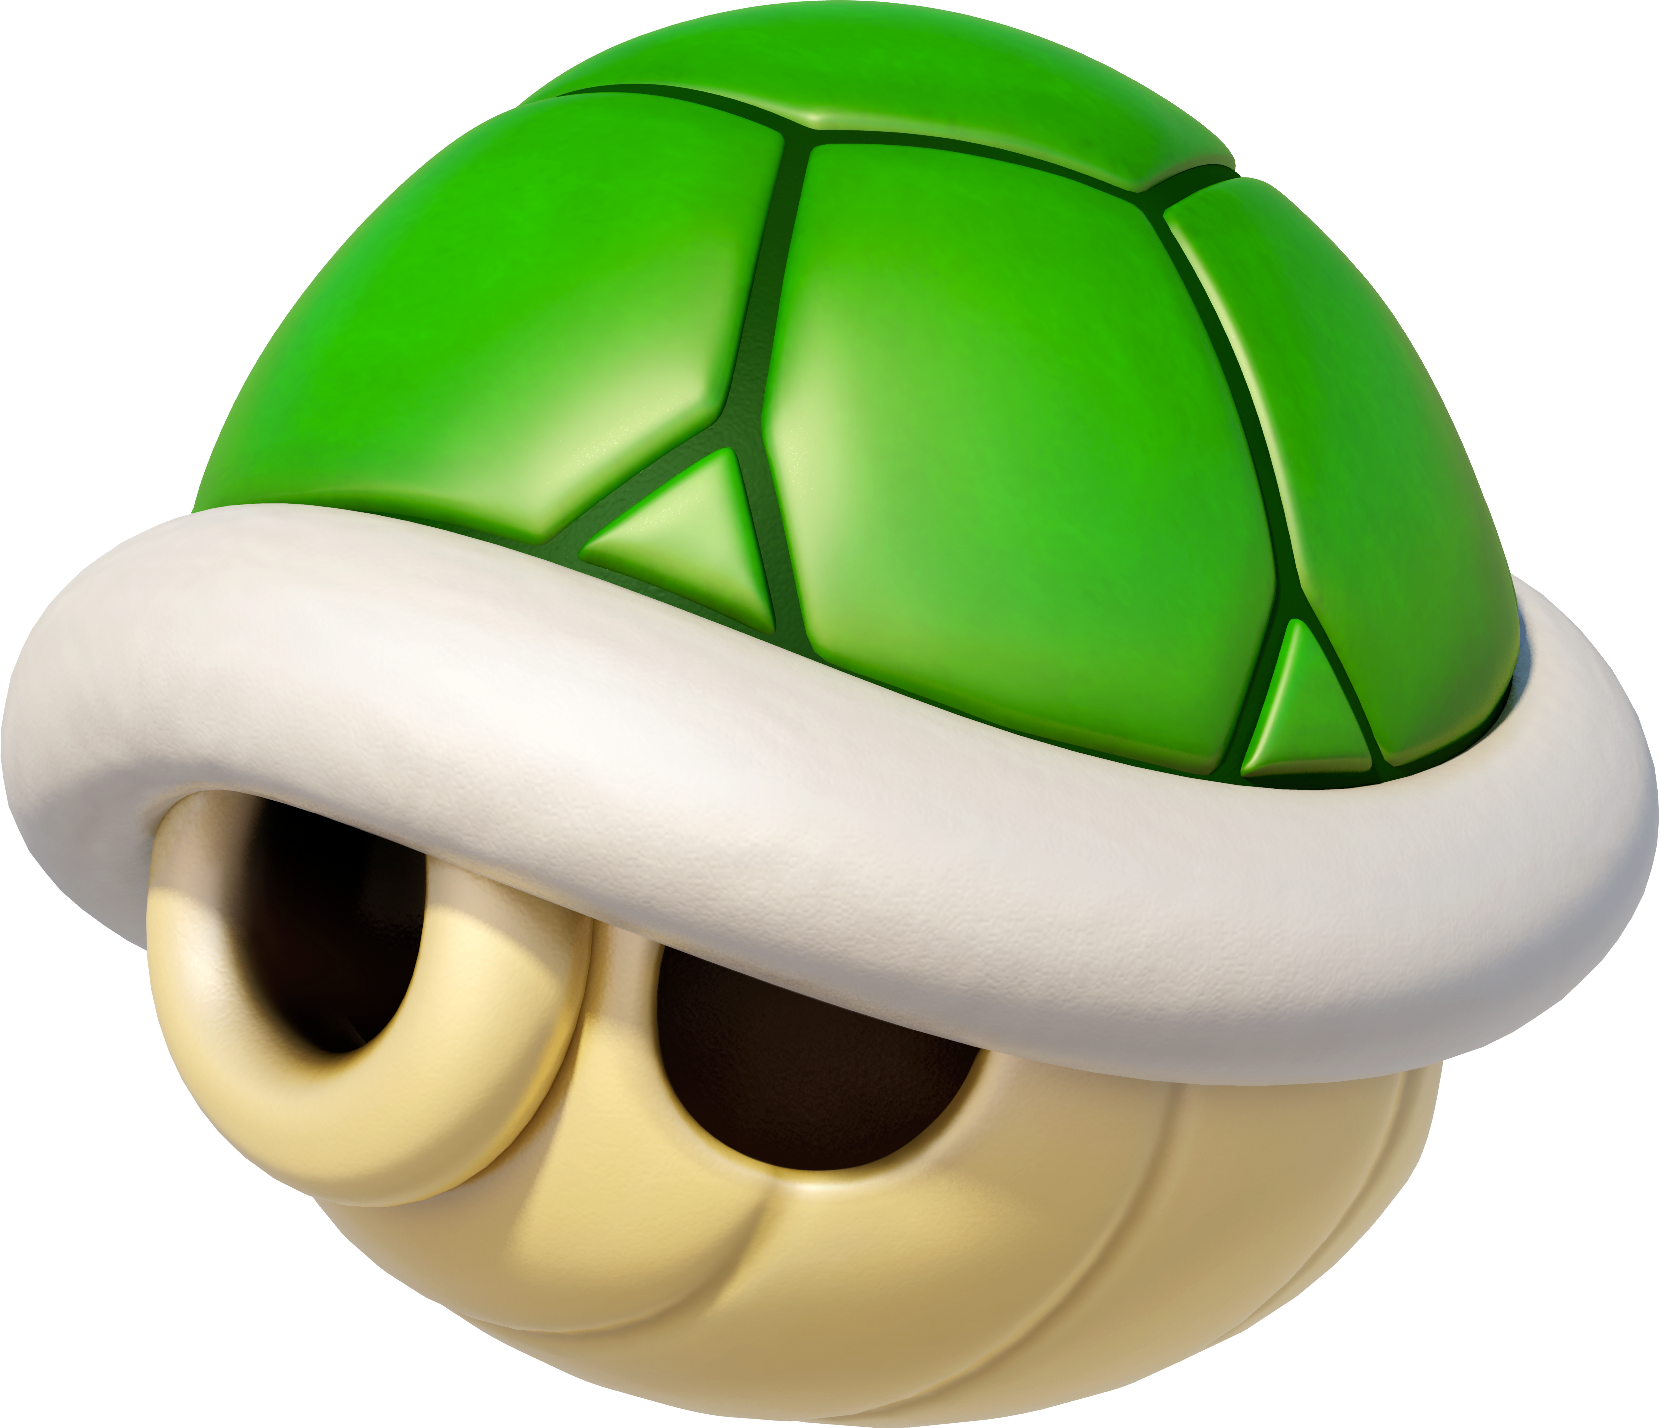 Green Shell - Blue Shell Mario Kart 8 (1660x1428)